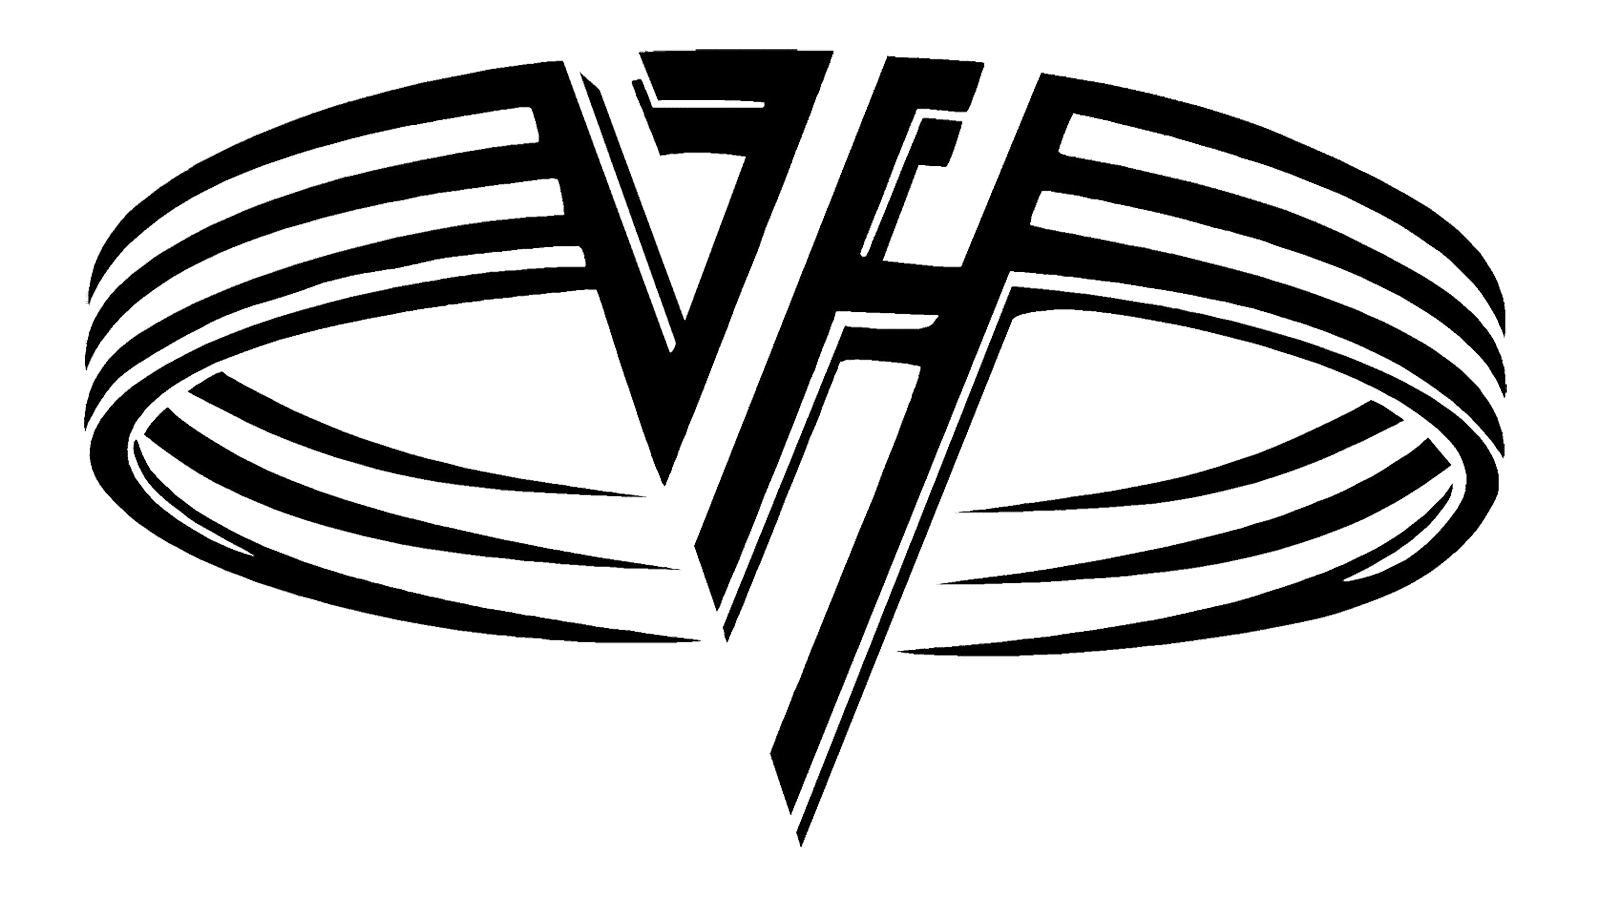 Van Halen Logo and symbol, meaning, history, sign.